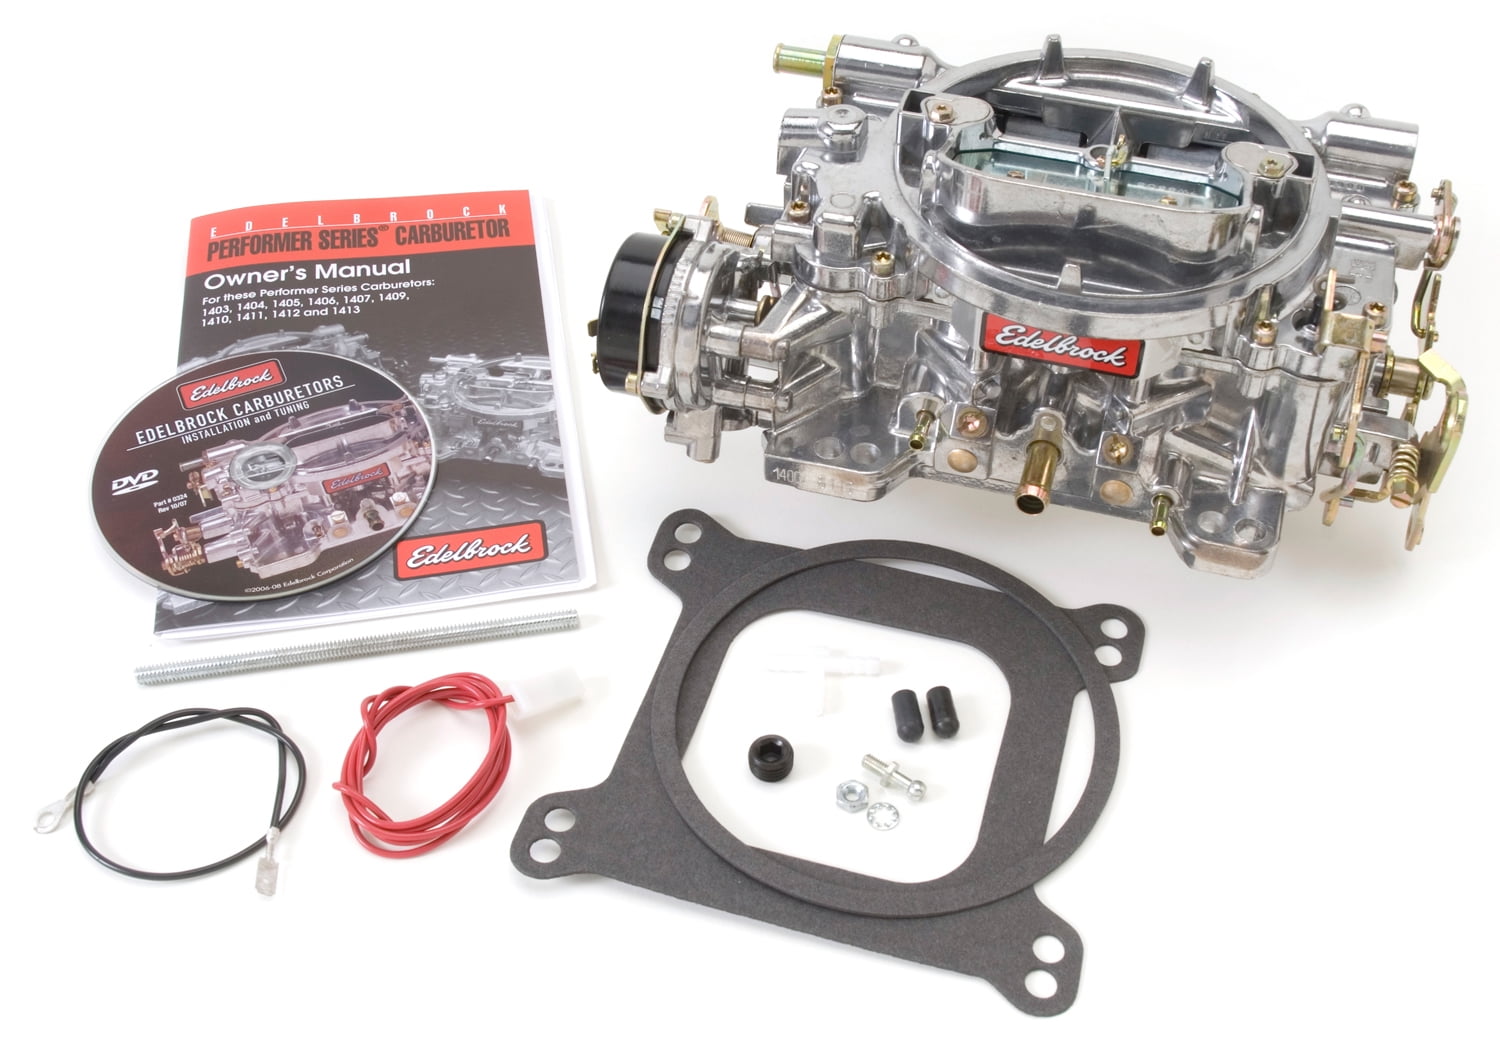 Walker Carb kit for Edelbrock 1400 series performance carburetors non-stick blue